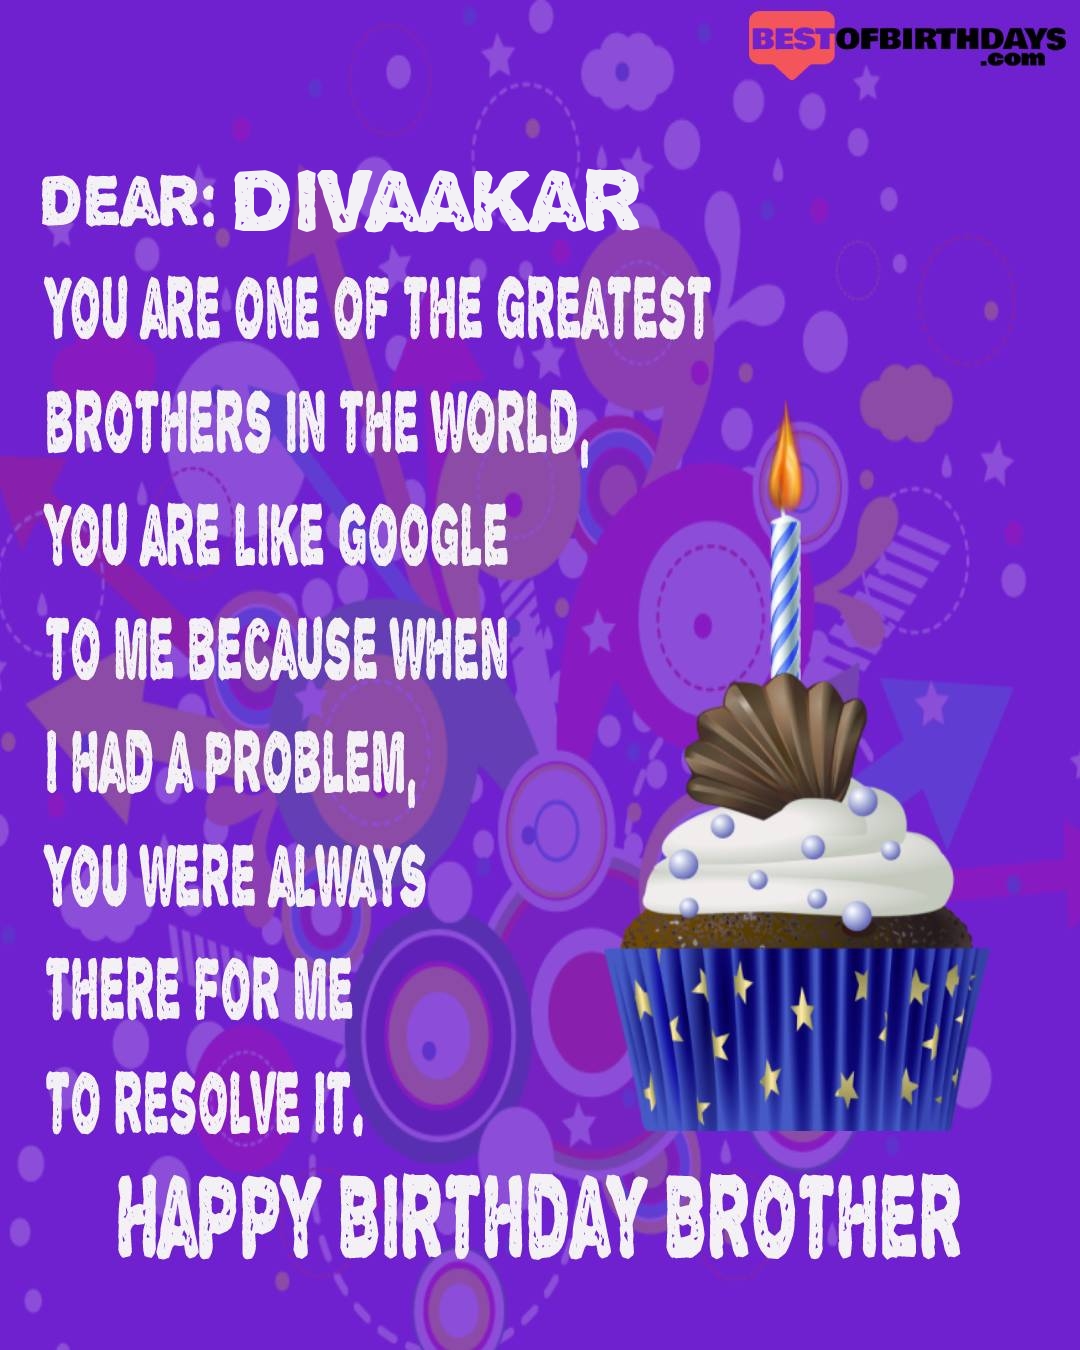 Happy birthday divaakar bhai brother bro